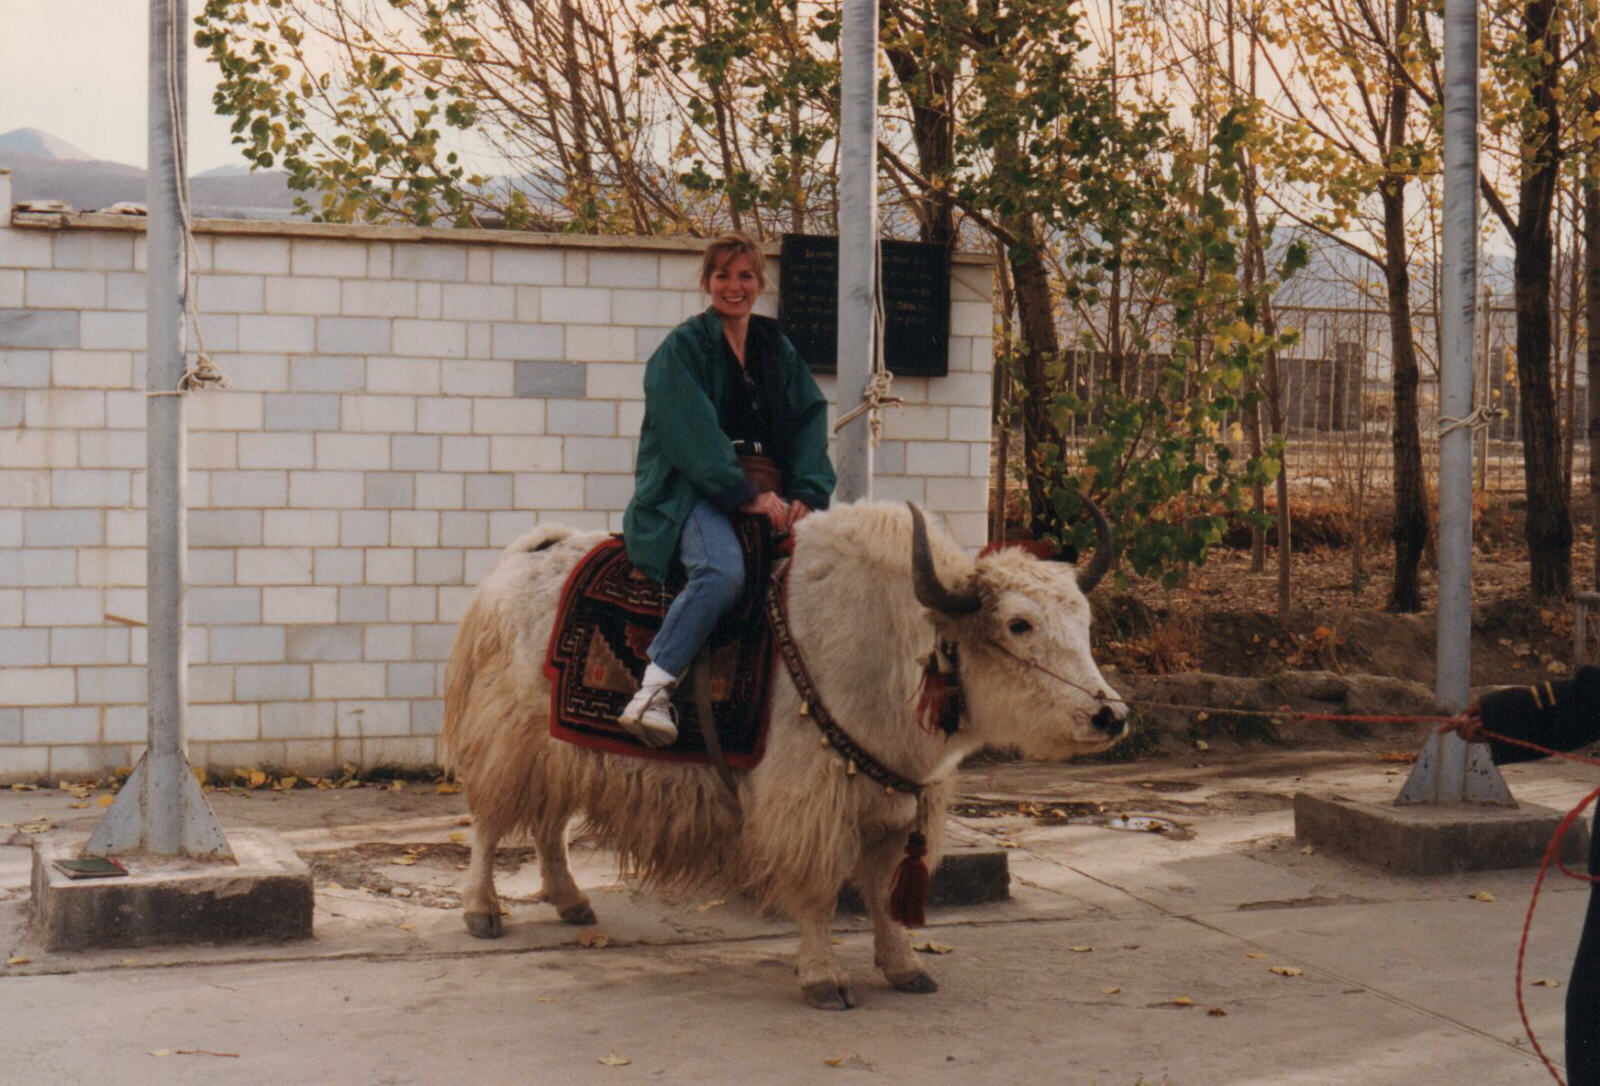 Sheila's Yak ride at Gyantse hotel, Tibet